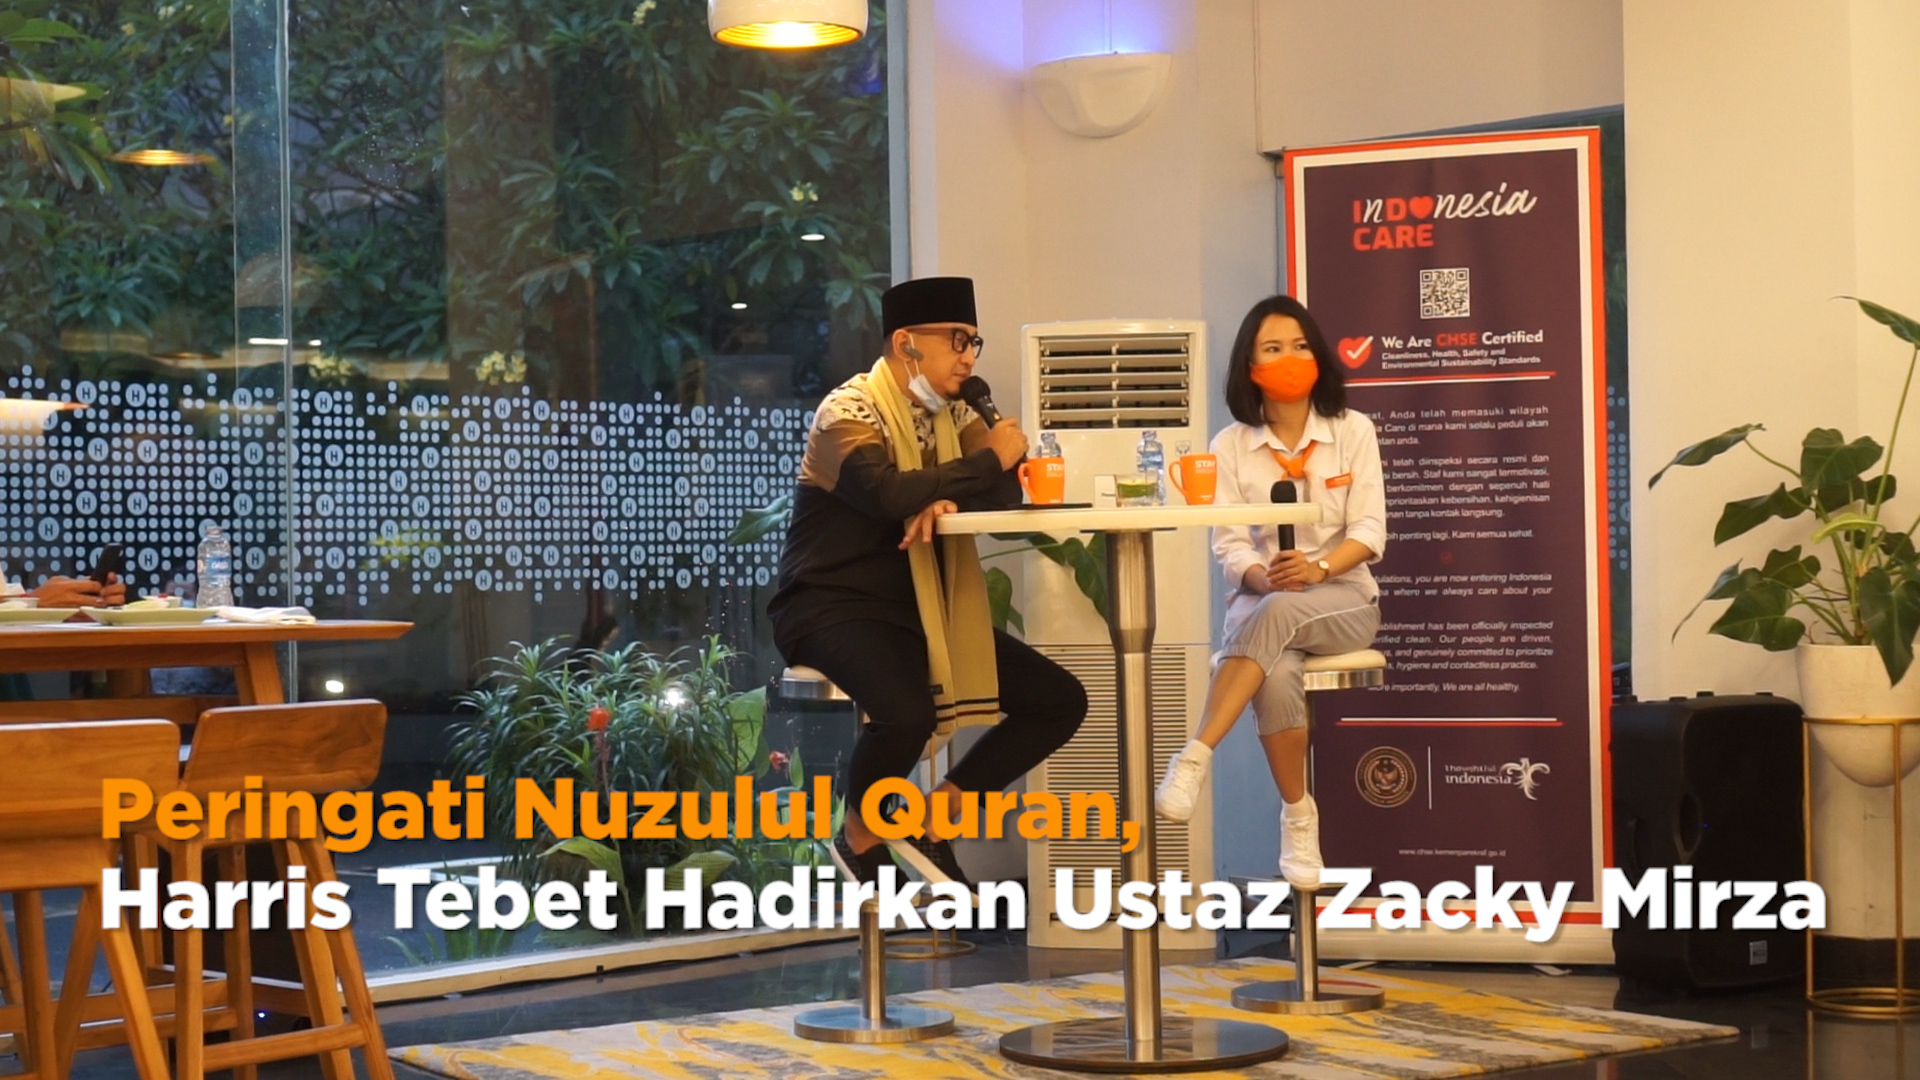 Peringati Nuzulul Quran, Harris Tebet Jakarta Hadirkan Ustaz Zacky Mirza